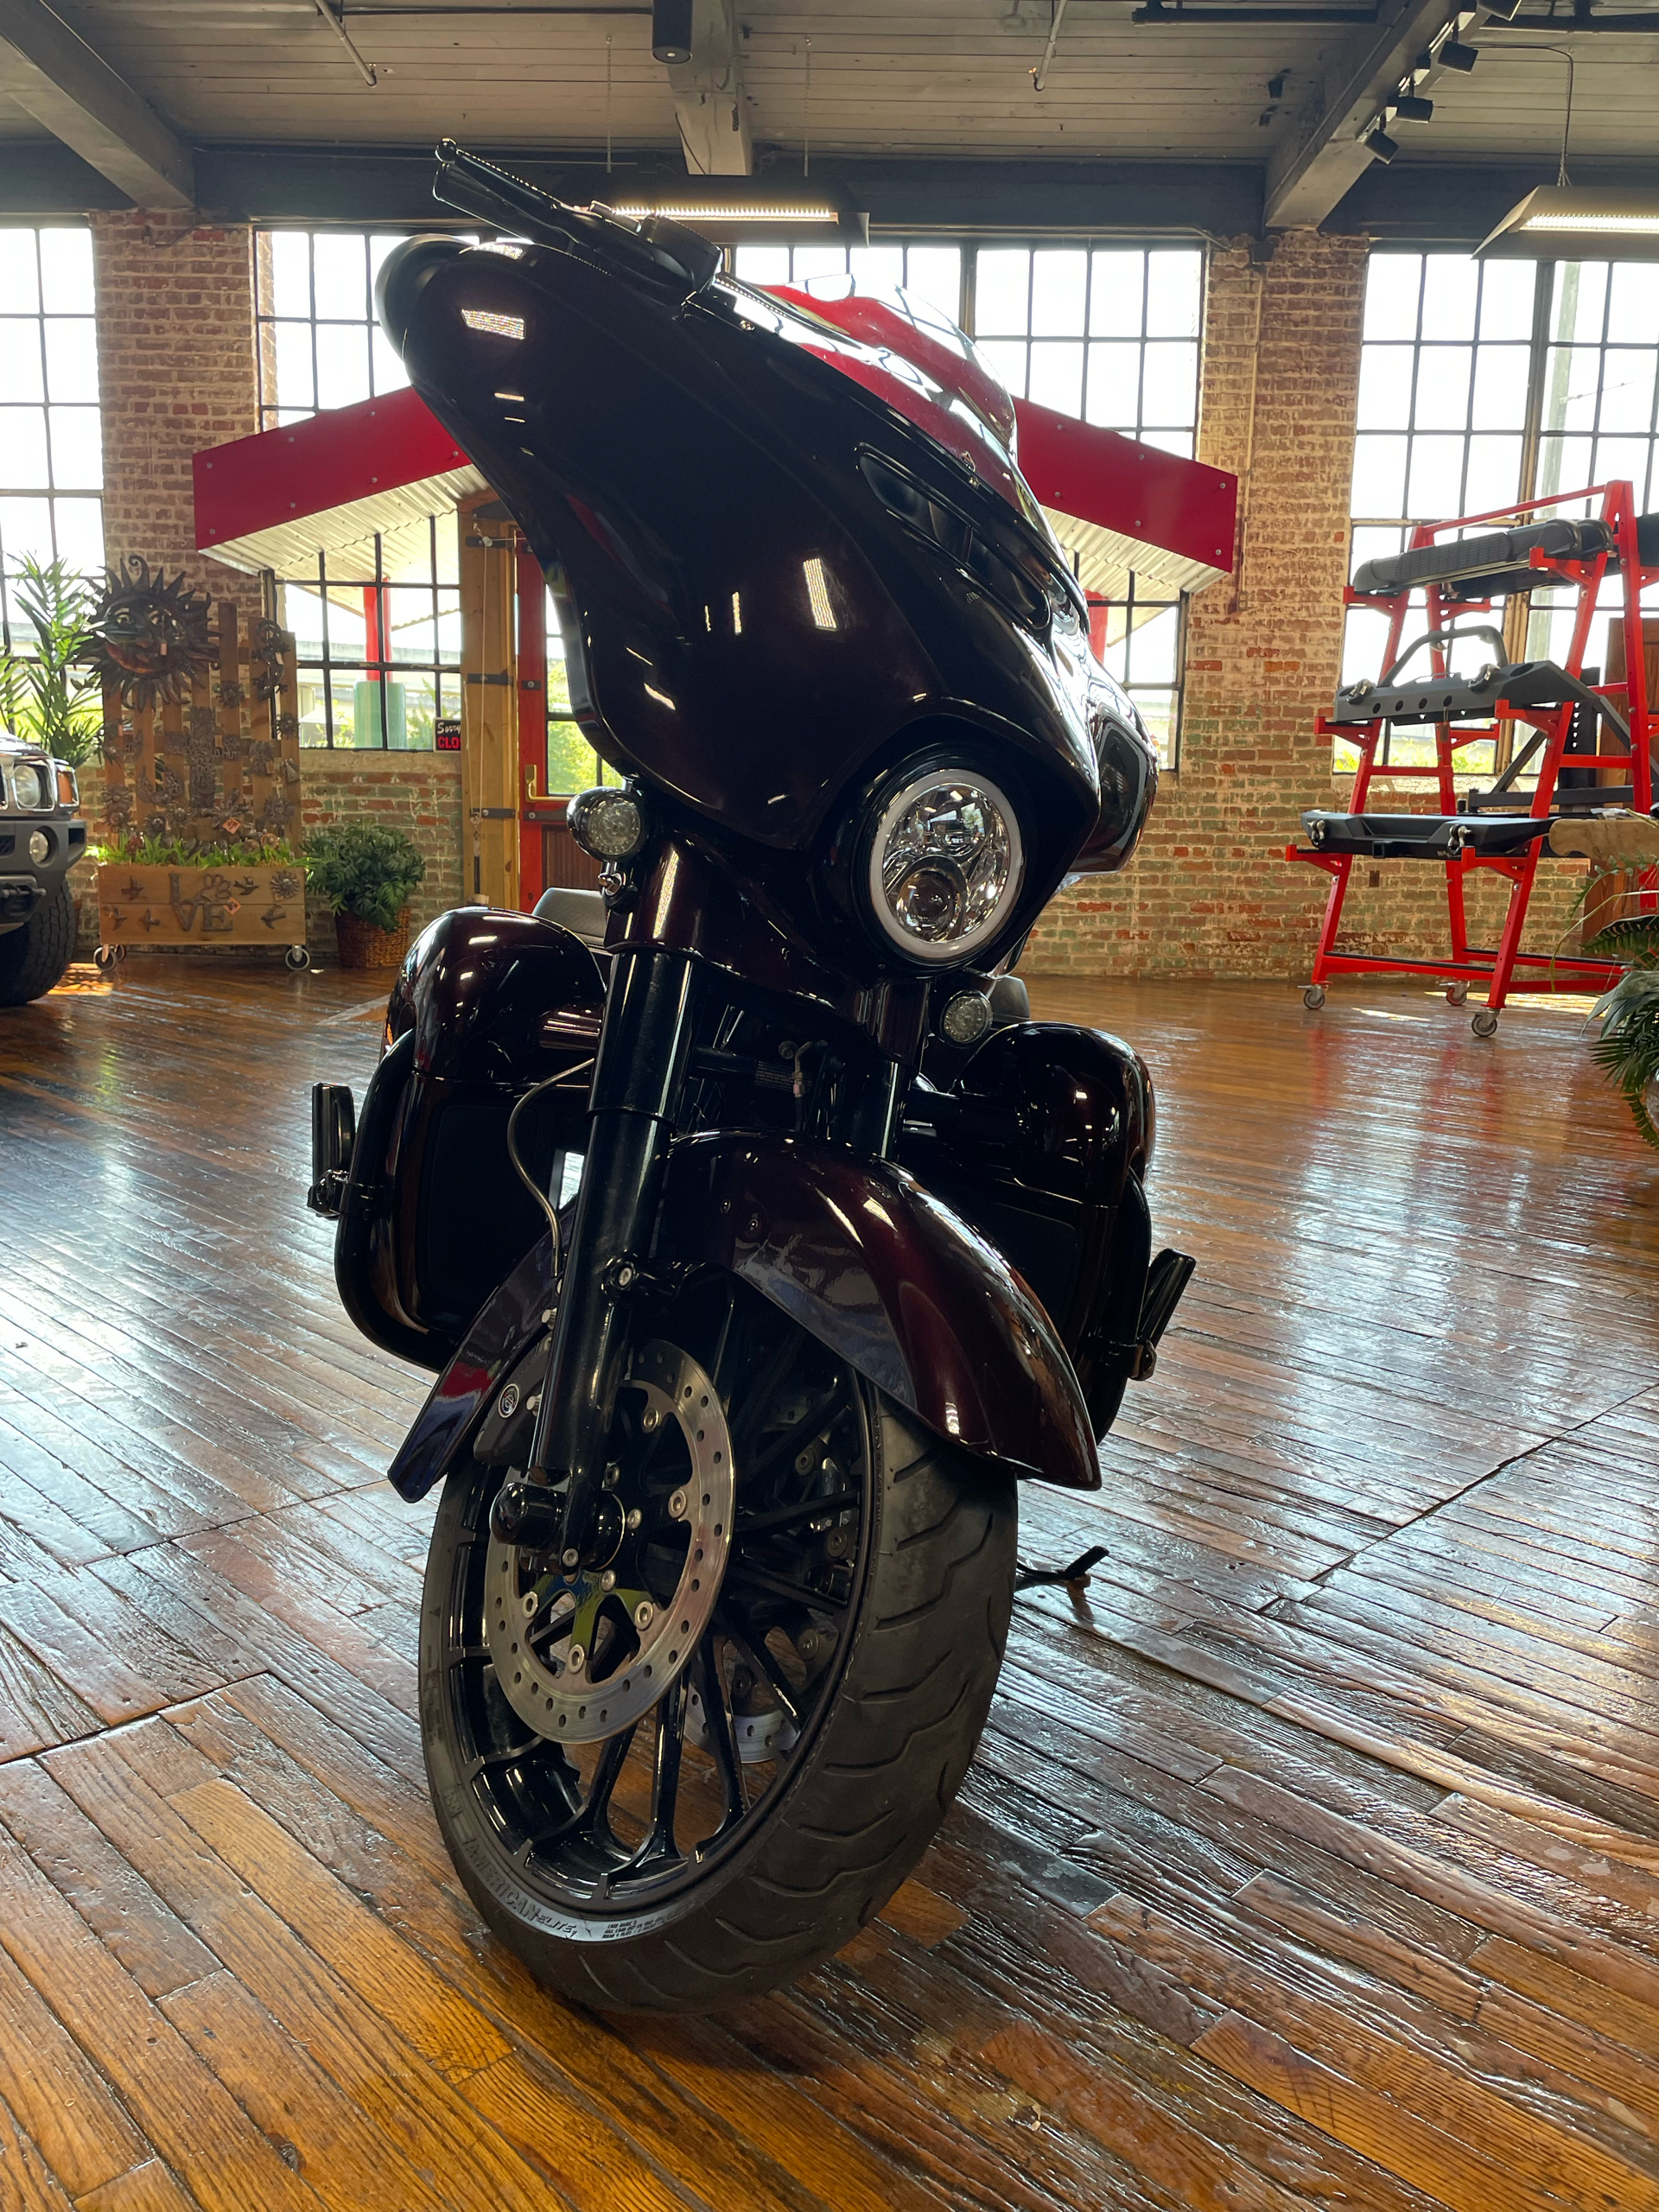 2019 Harley-Davidson CVO™ Street Glide® in Laurel, Mississippi - Photo 8